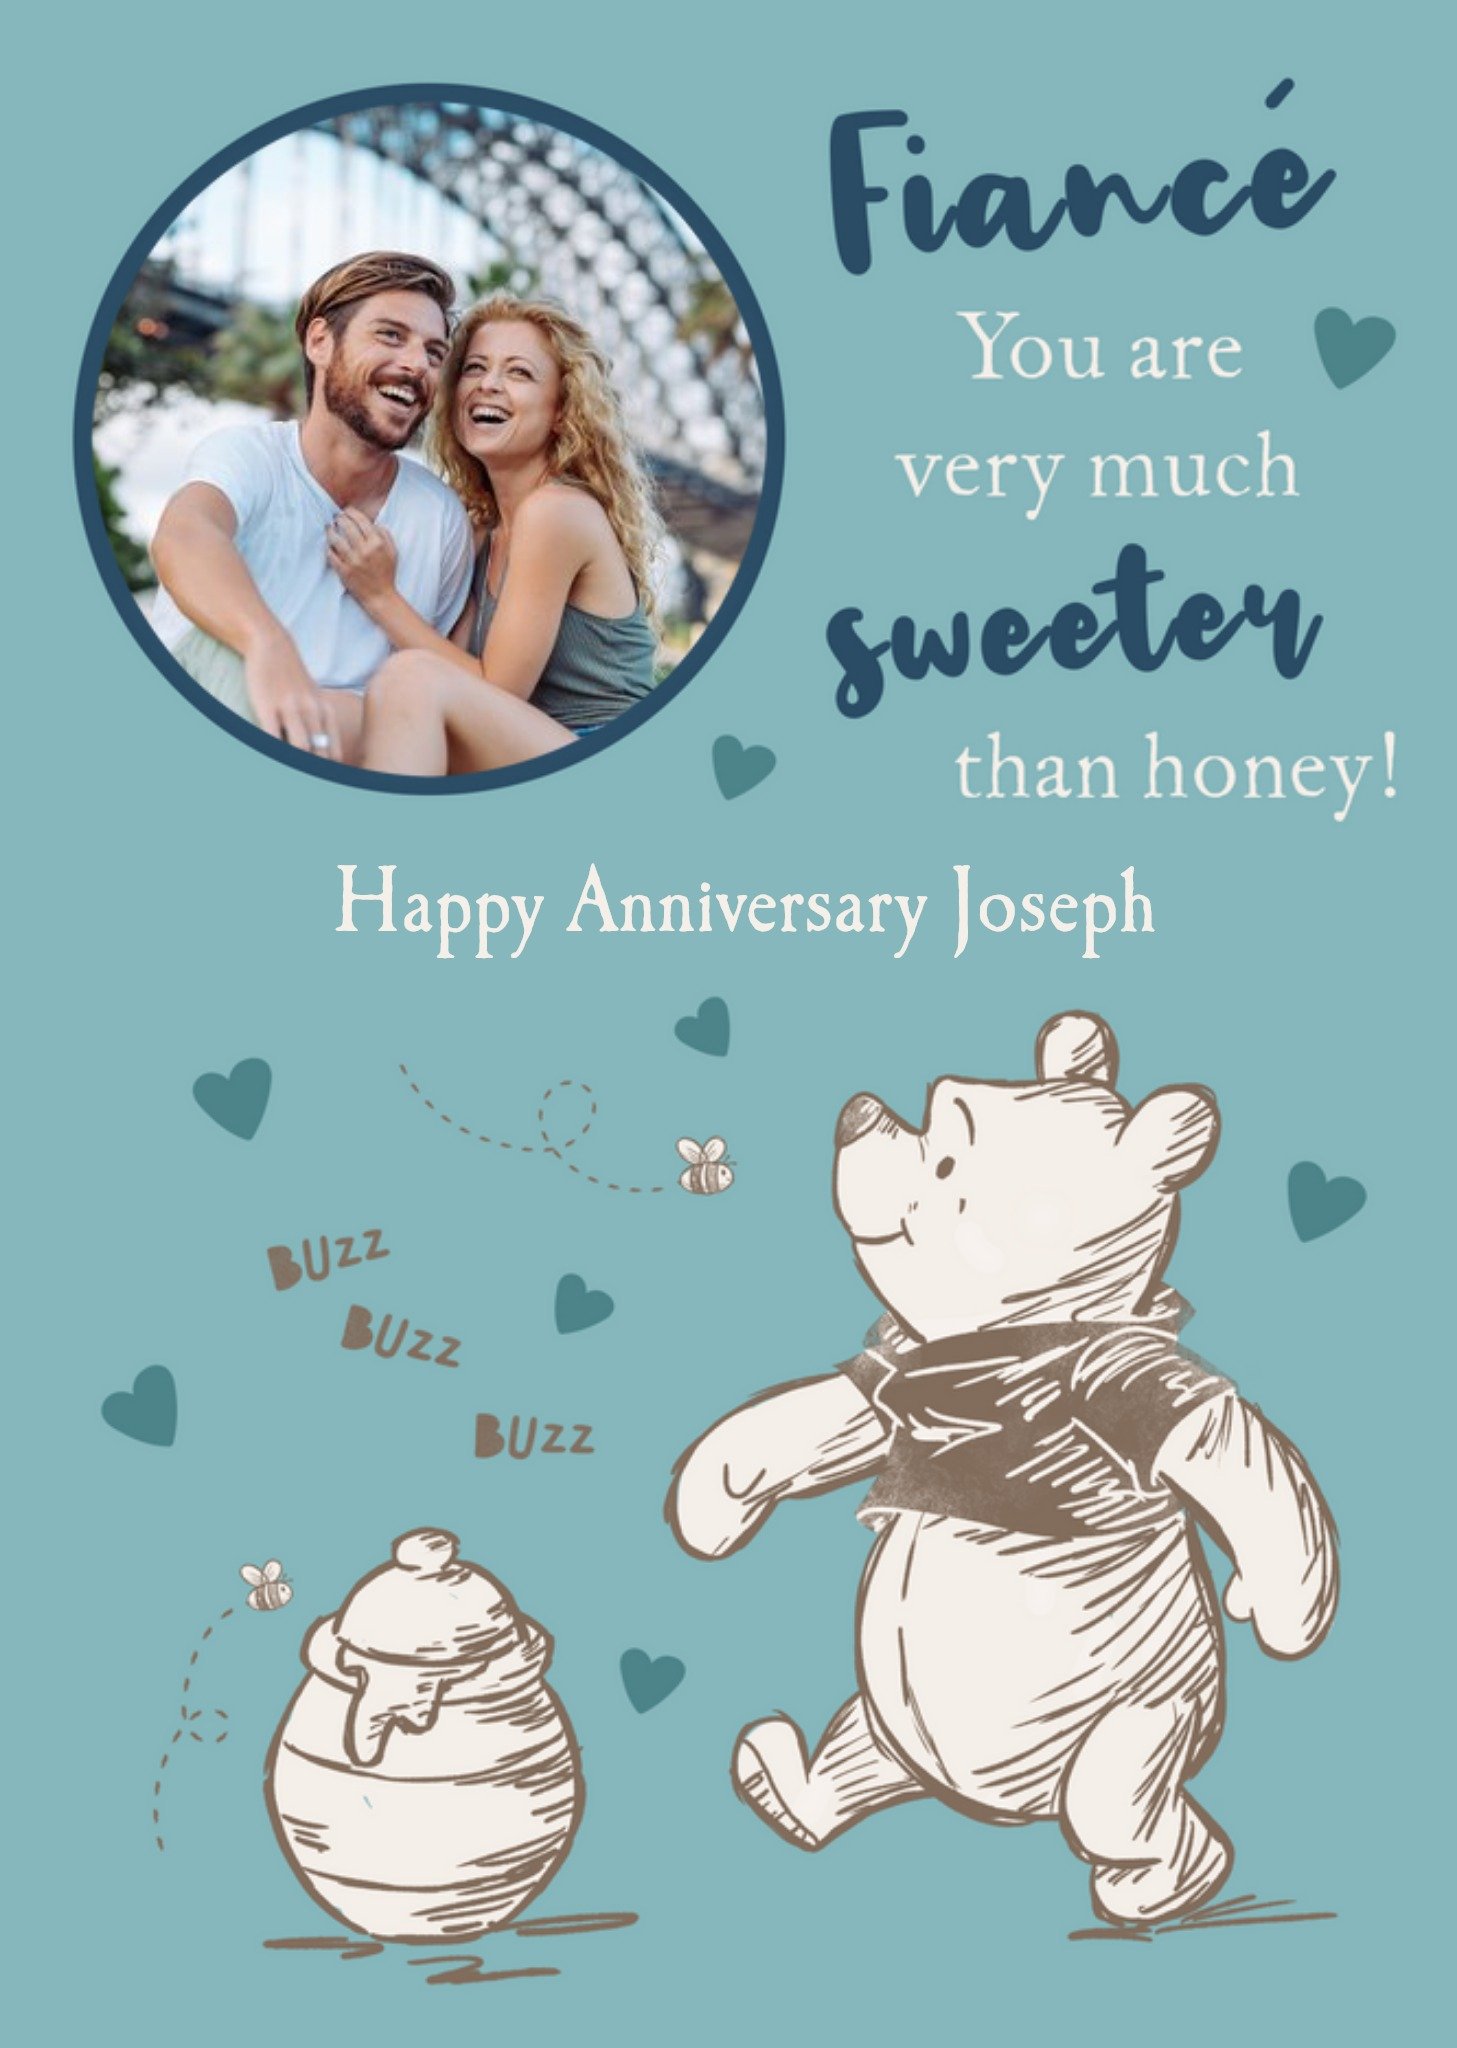 Disney Winnie The Pooh Fiance Sweeter Than Honey Photo Upload Anniversary Card, Large